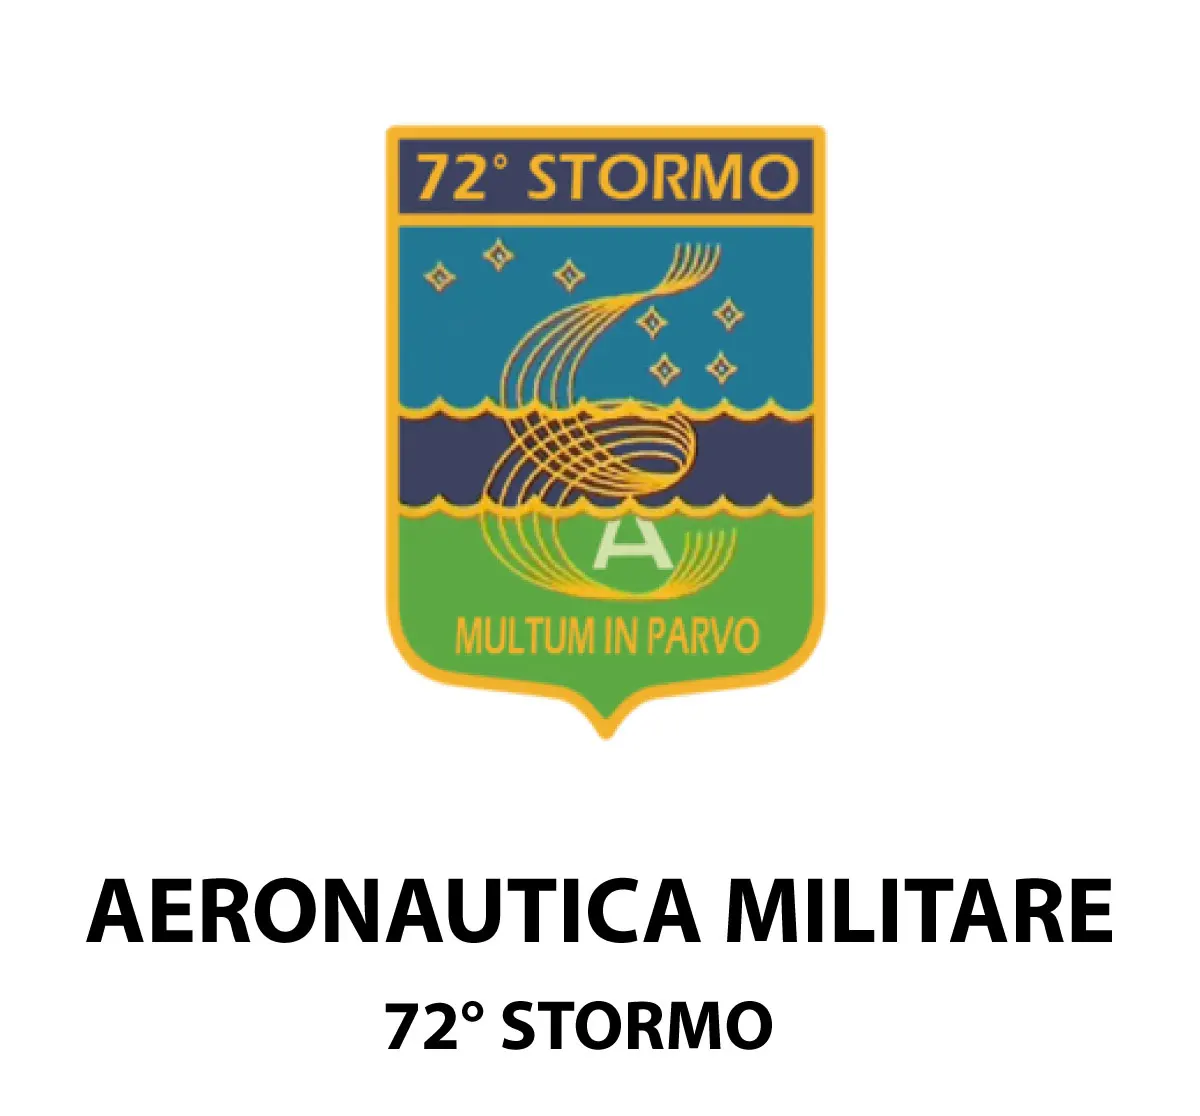 Aeronautica Militare 72 Stormo